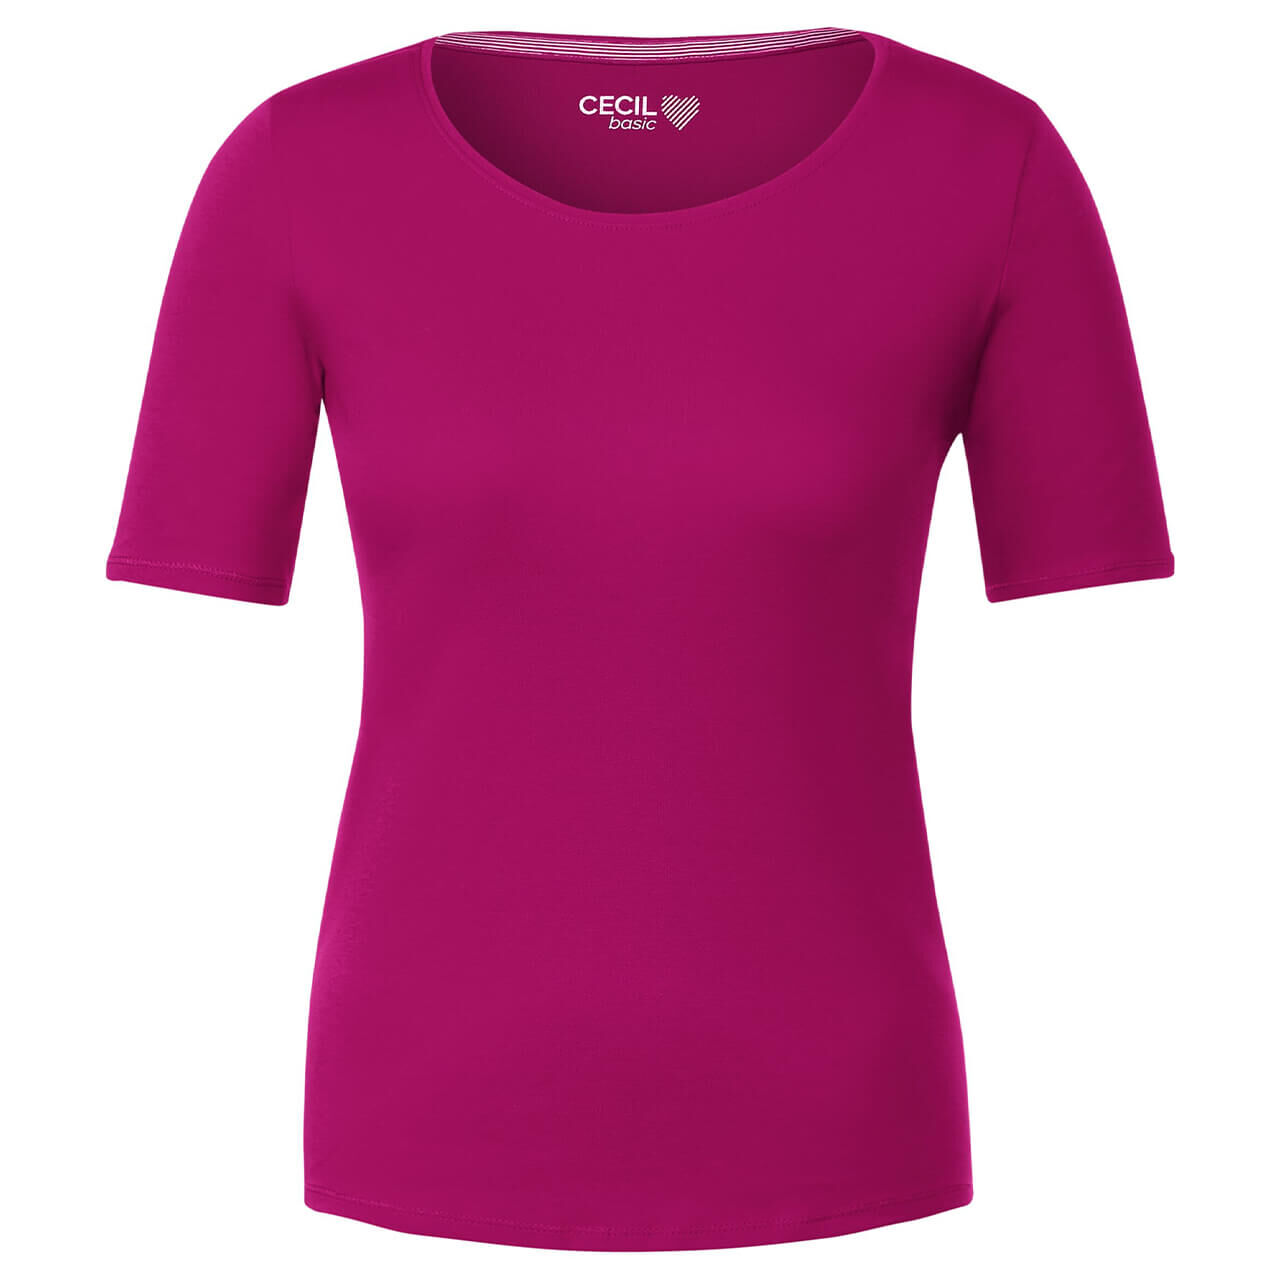 Cecil Lena T-Shirt cool pink